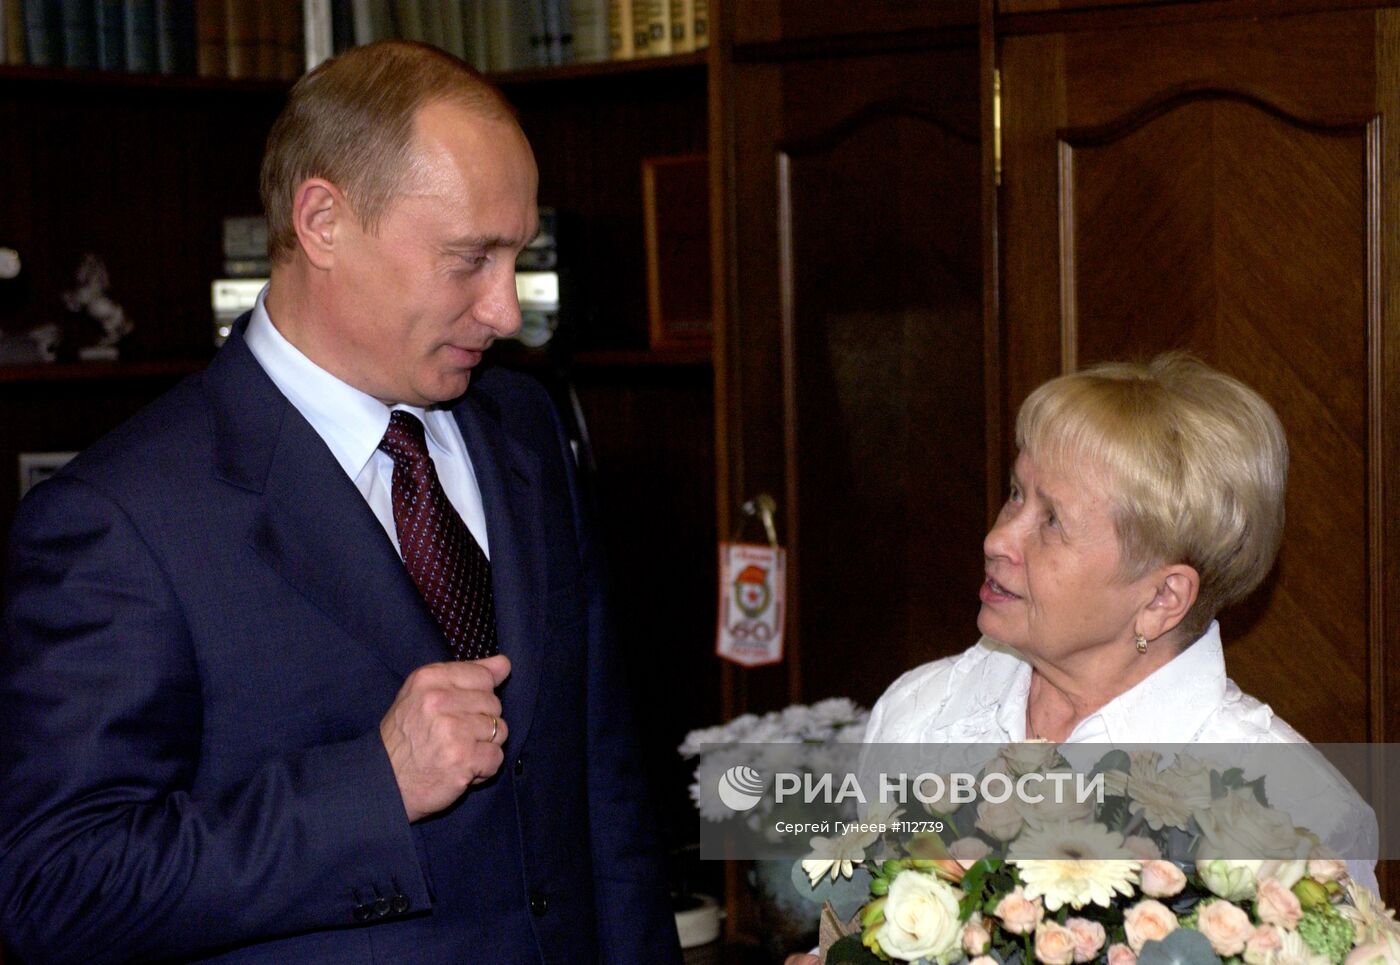 В.Путин поздравляет А.Пахмутову с юбилеем